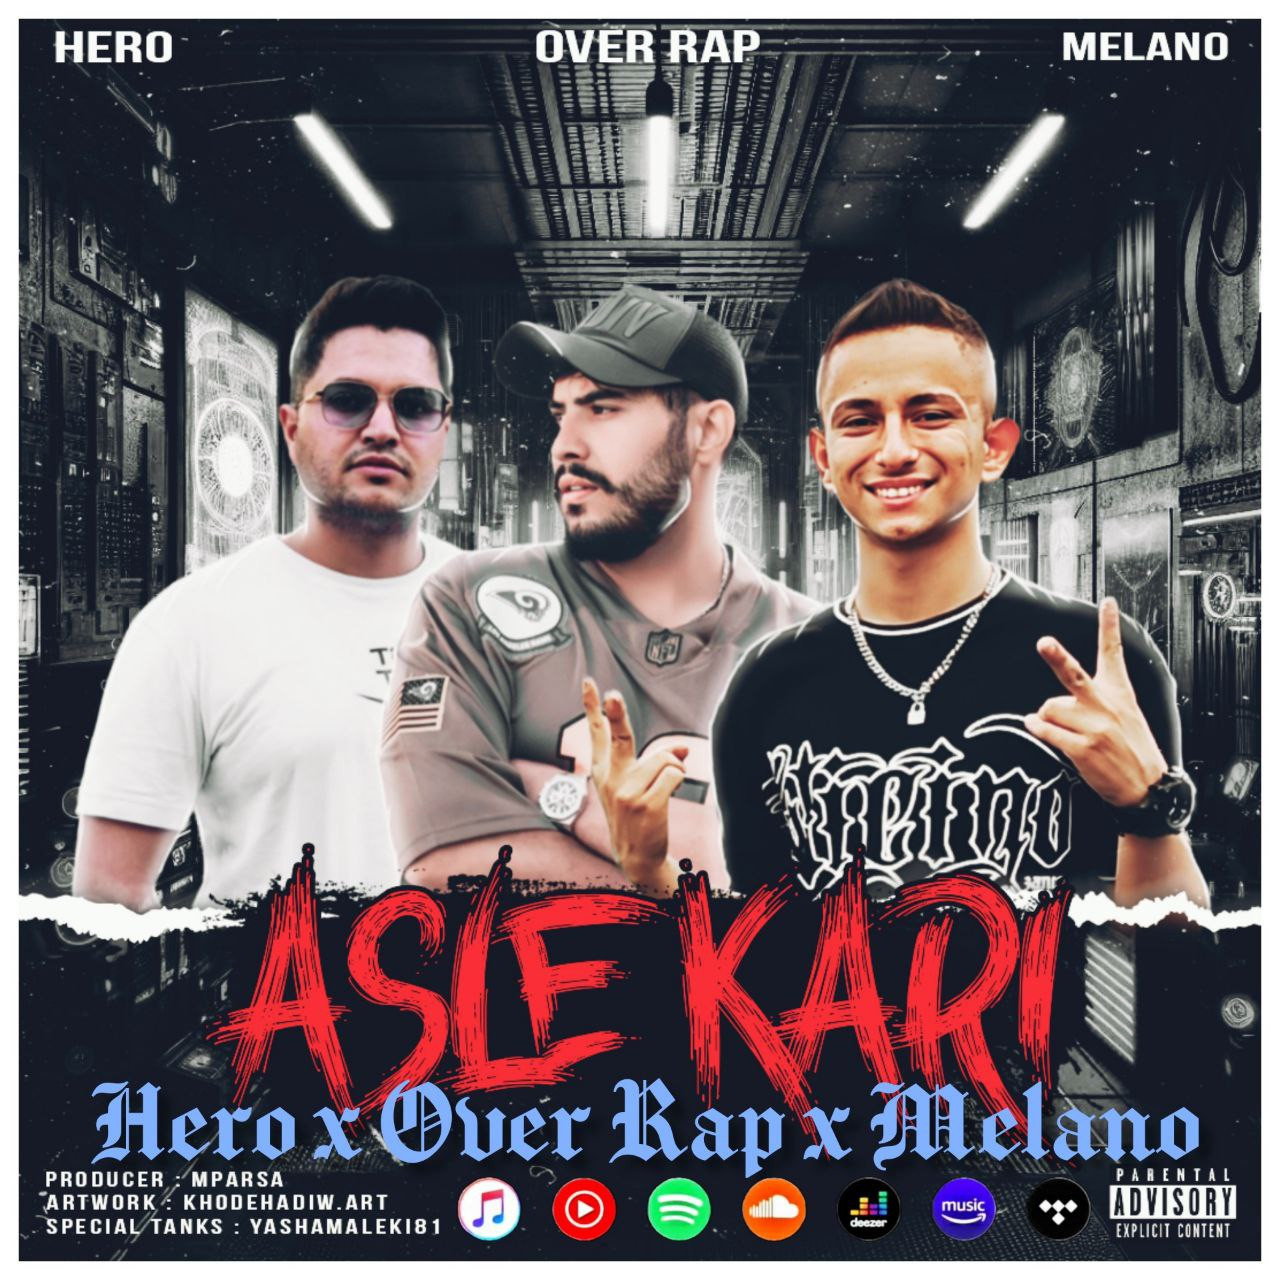 Over Rap x Hero x Melano - Asle Kari